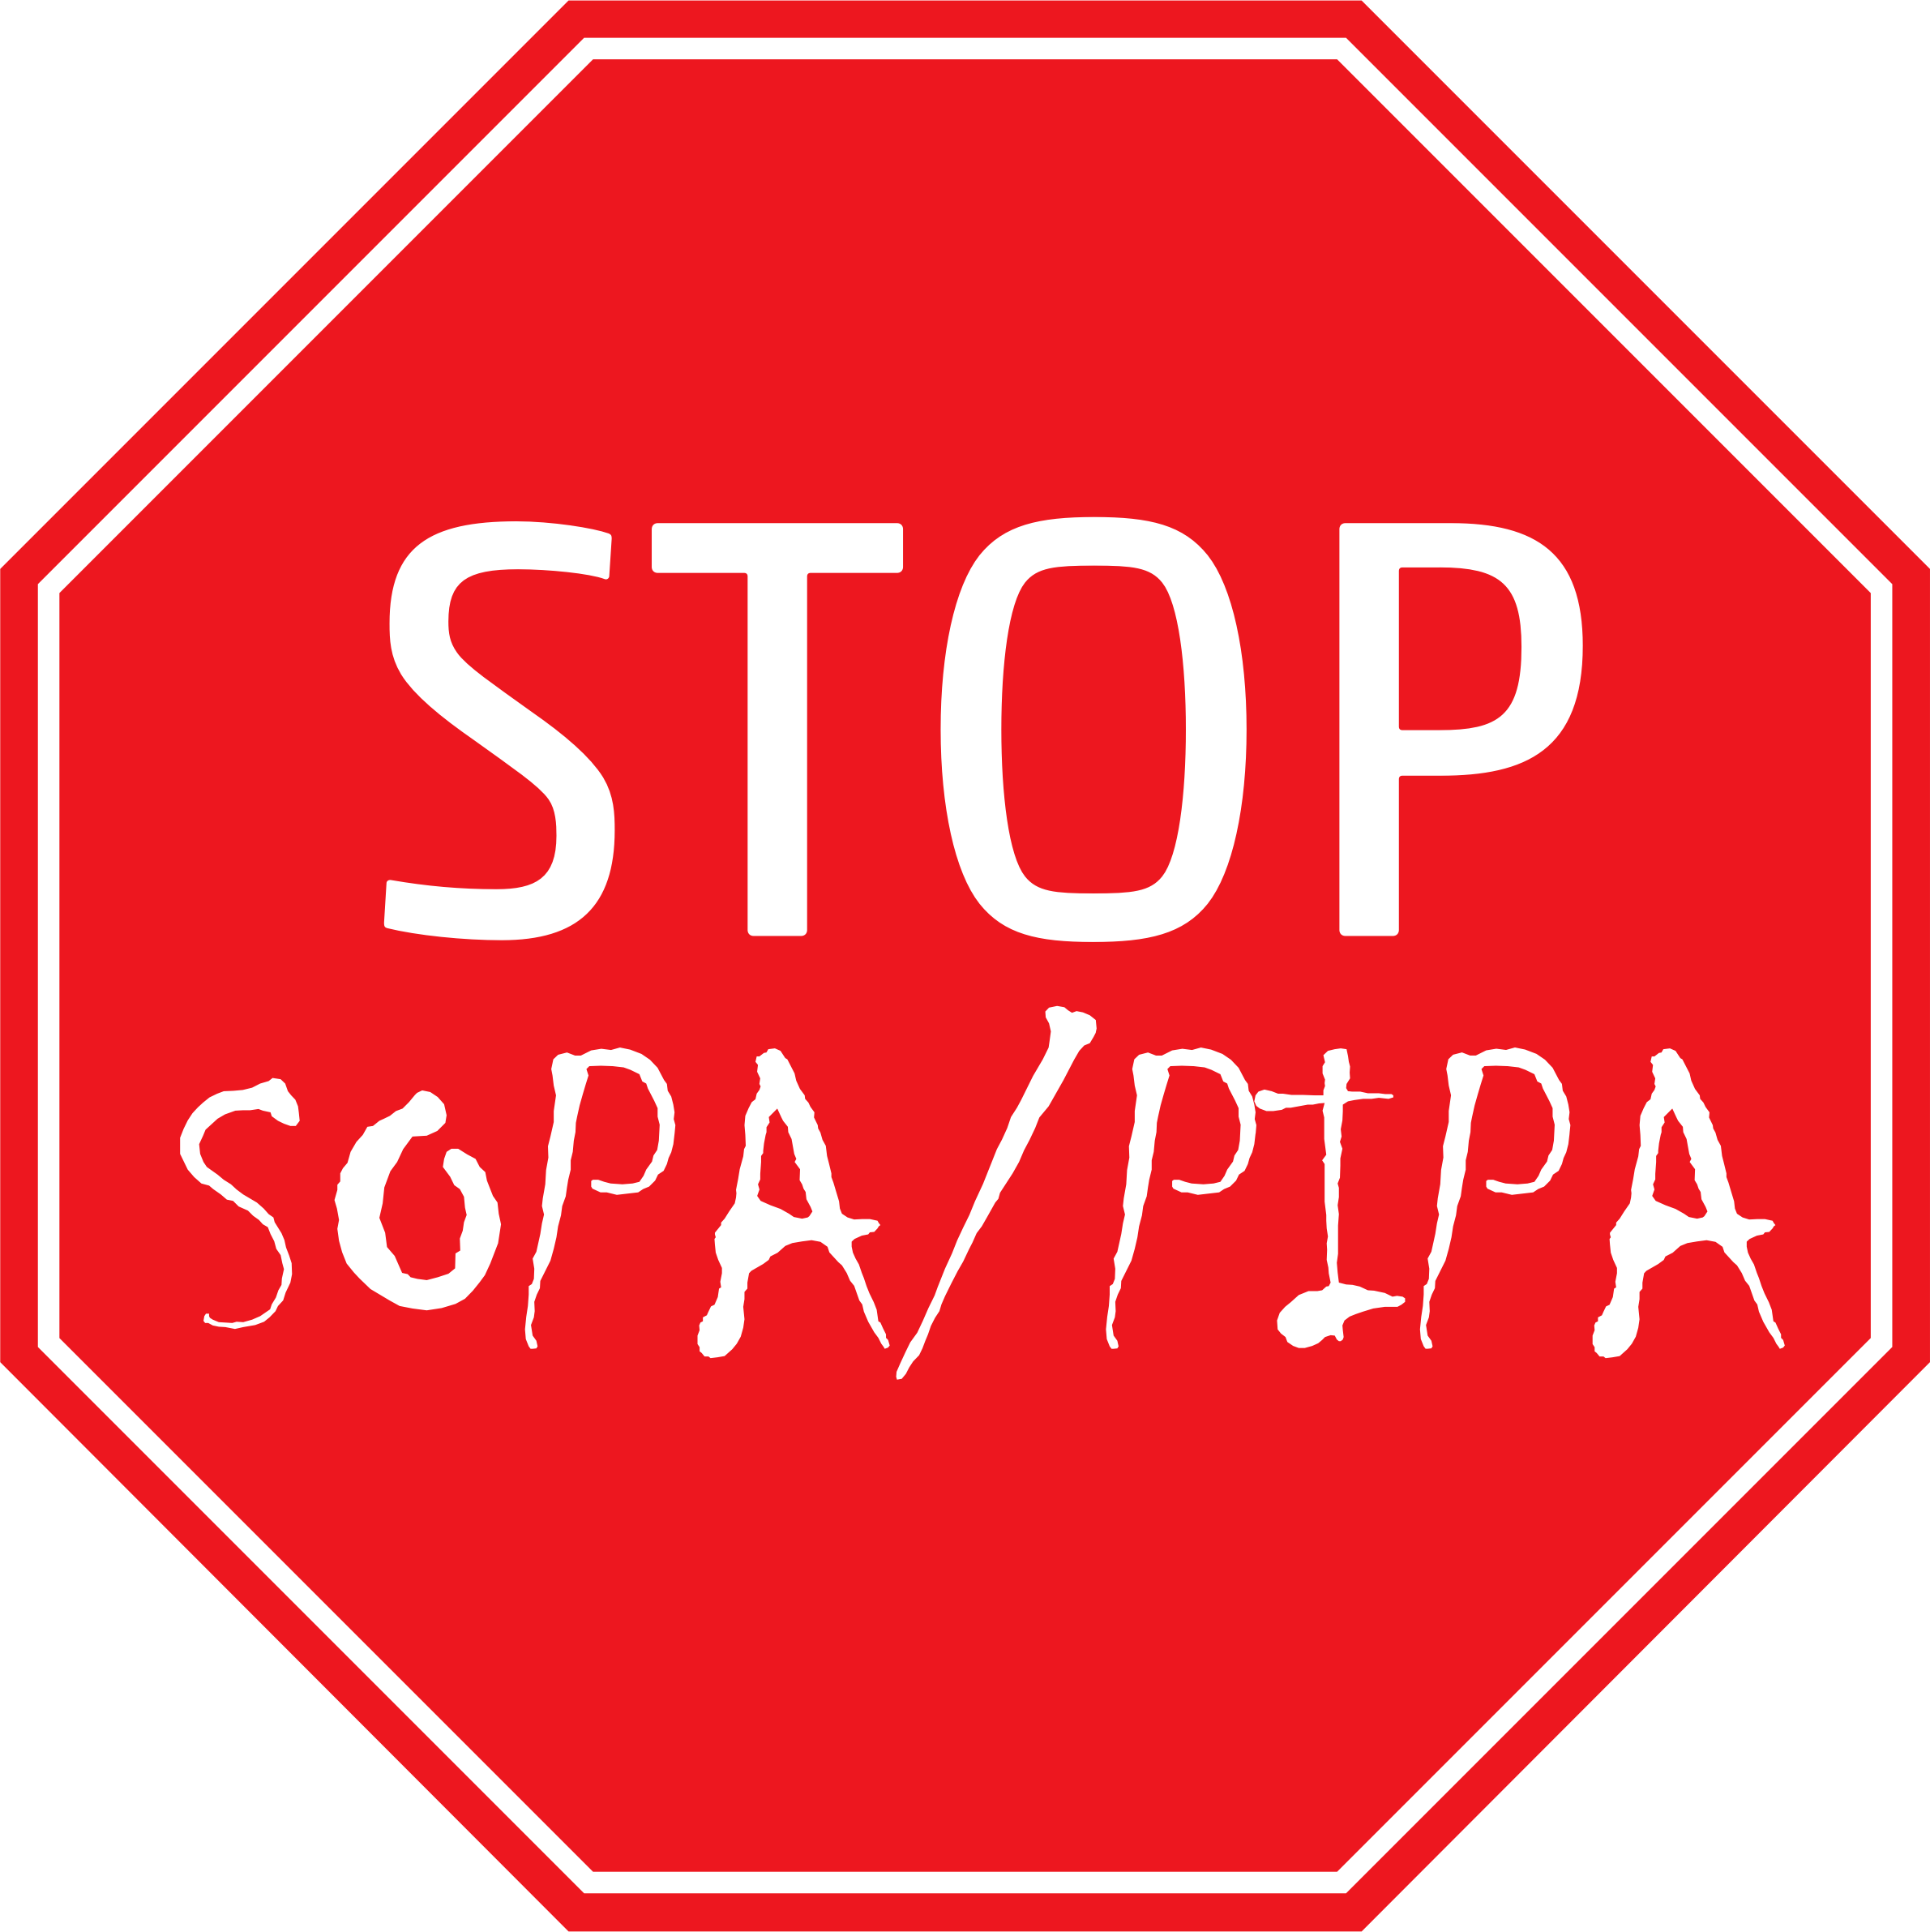 Clipart - STOP SOPA/PIPA Vinyl Cut